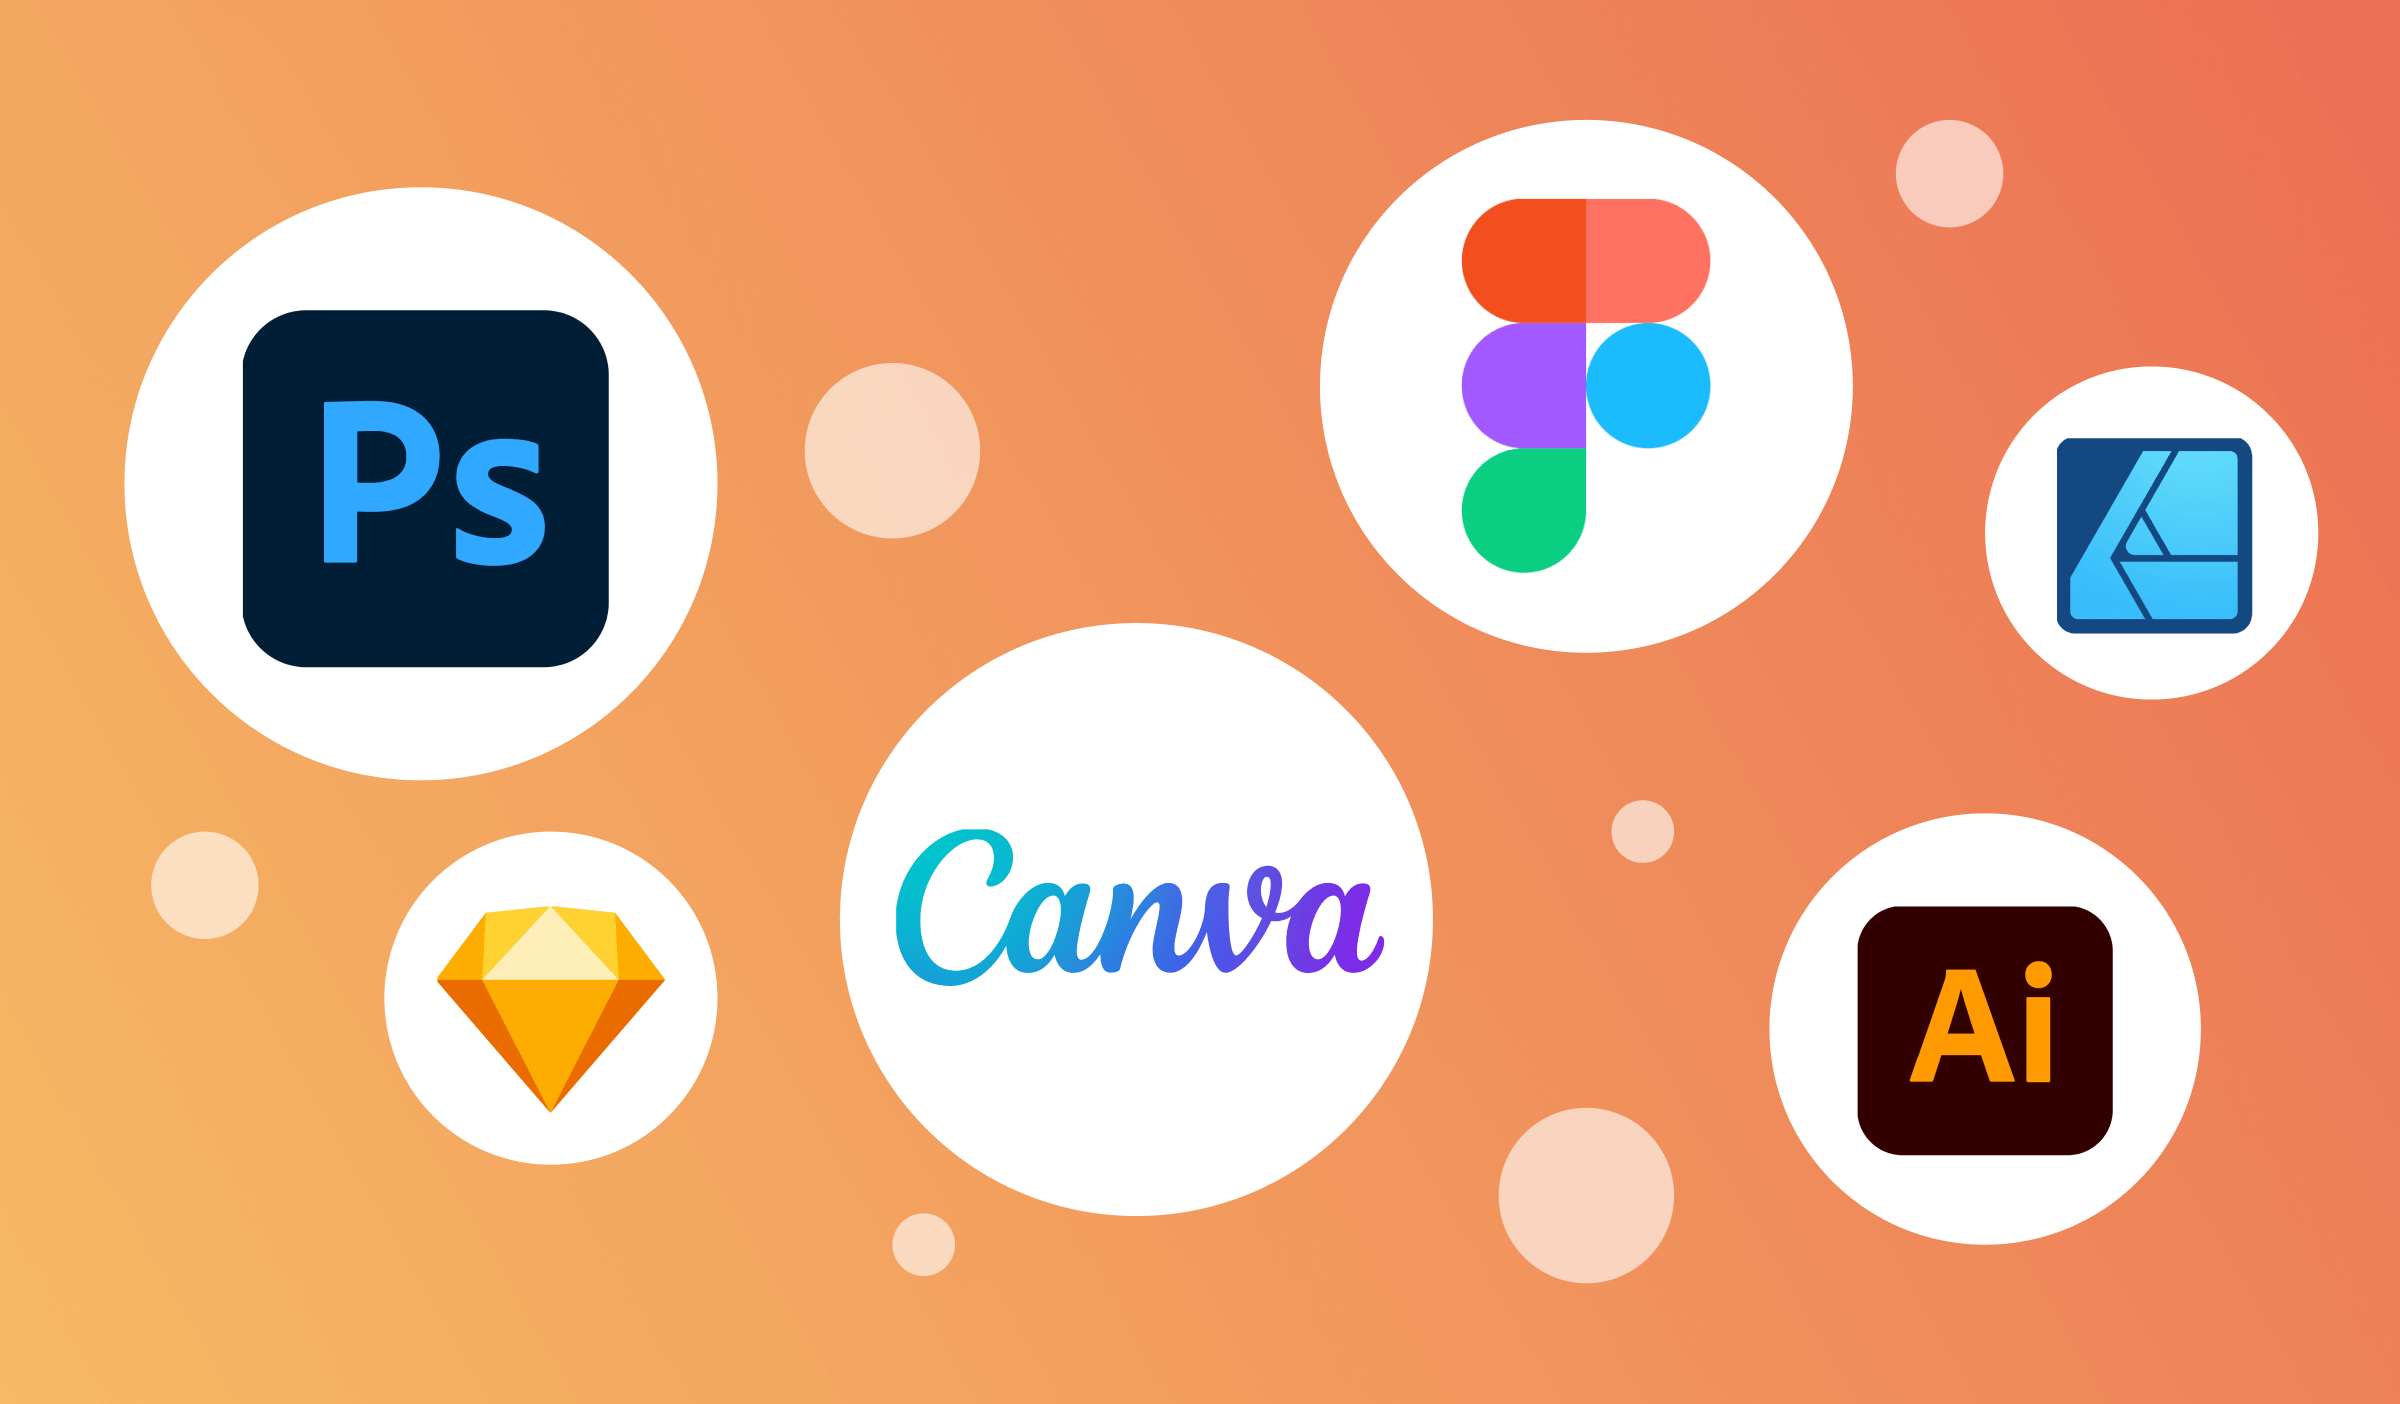 Icons for Adobe Photoshop, Sketch, Canva, Figma, Affinity Designer, and Adobe Illustrator